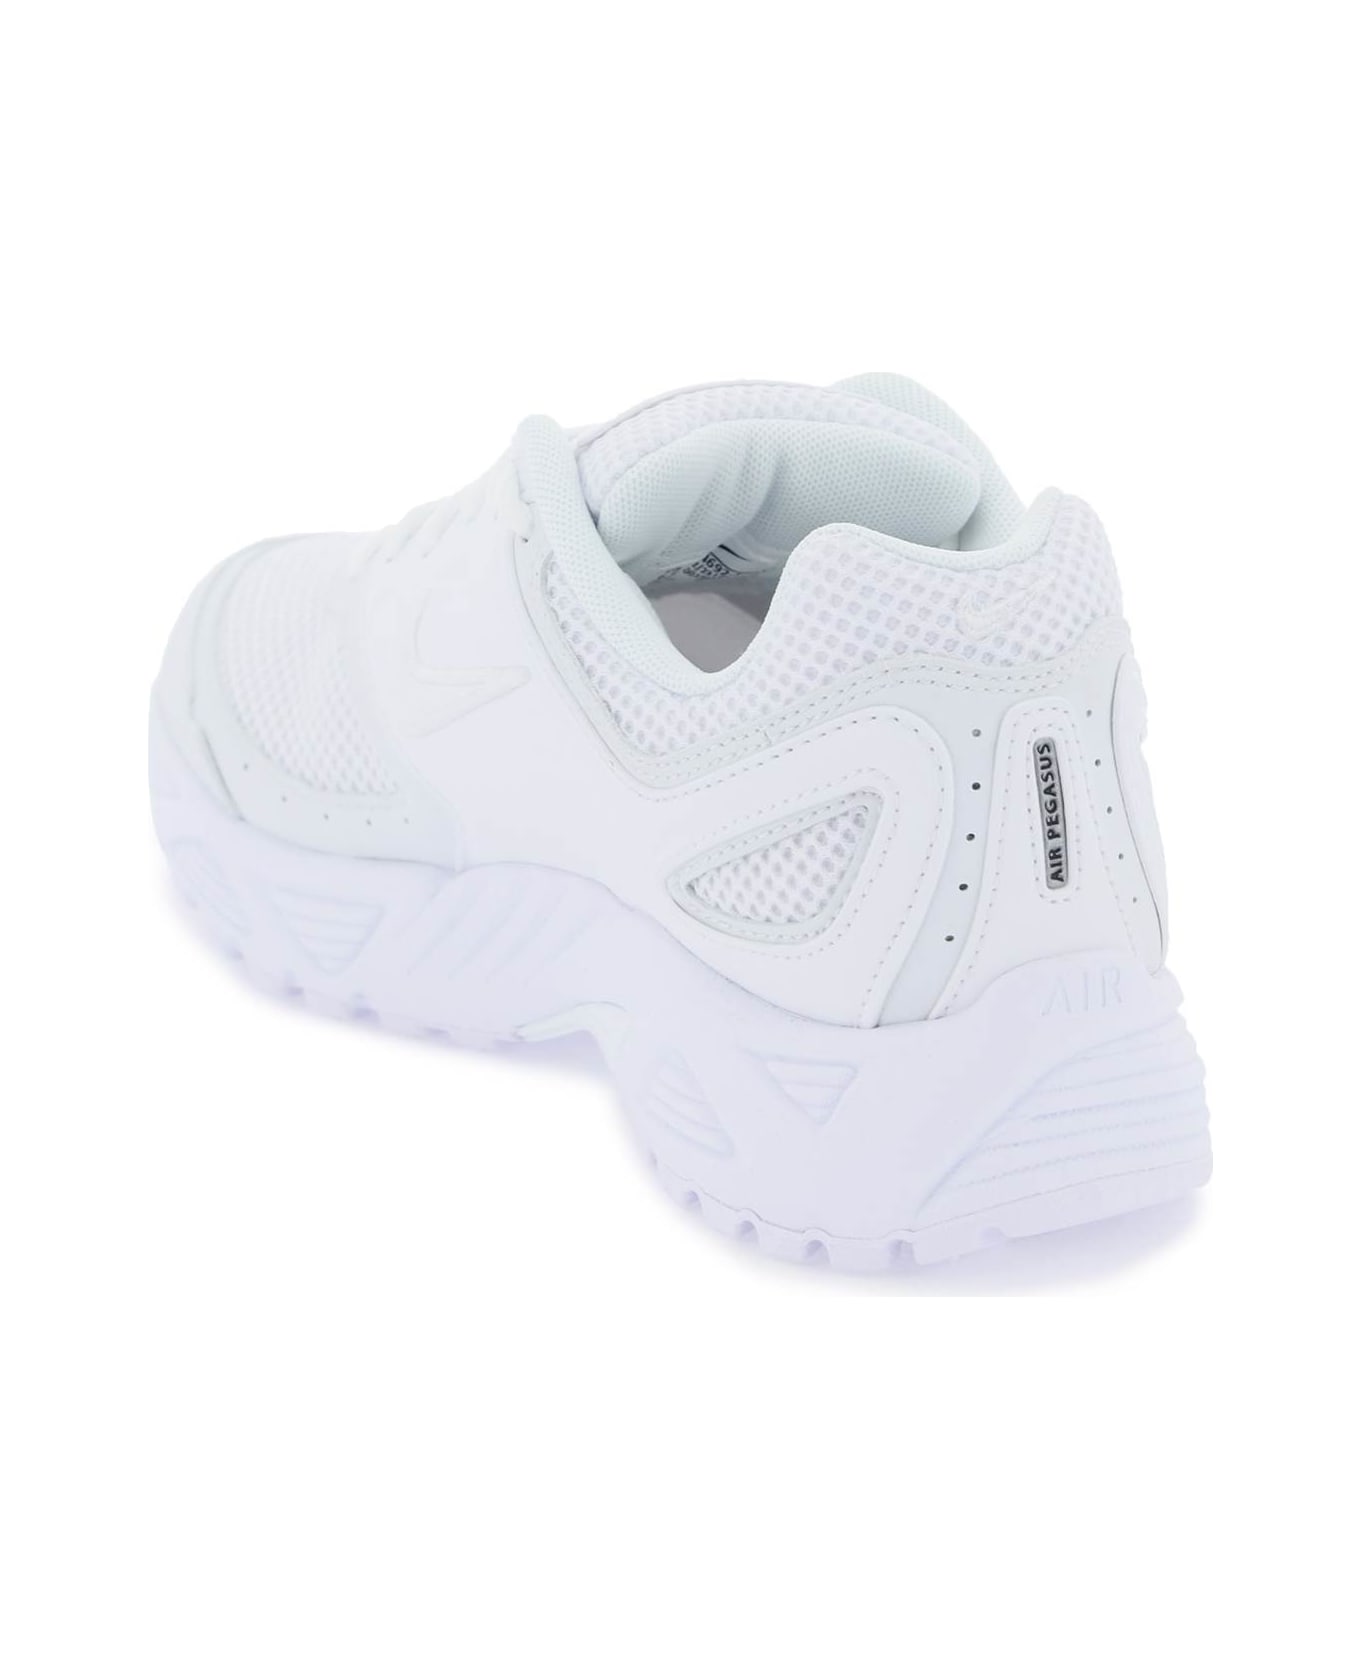 Comme Des Garçons Homme Plus Air Pegasus 2005 Sp Sneakers X Nike - WHITE (White)